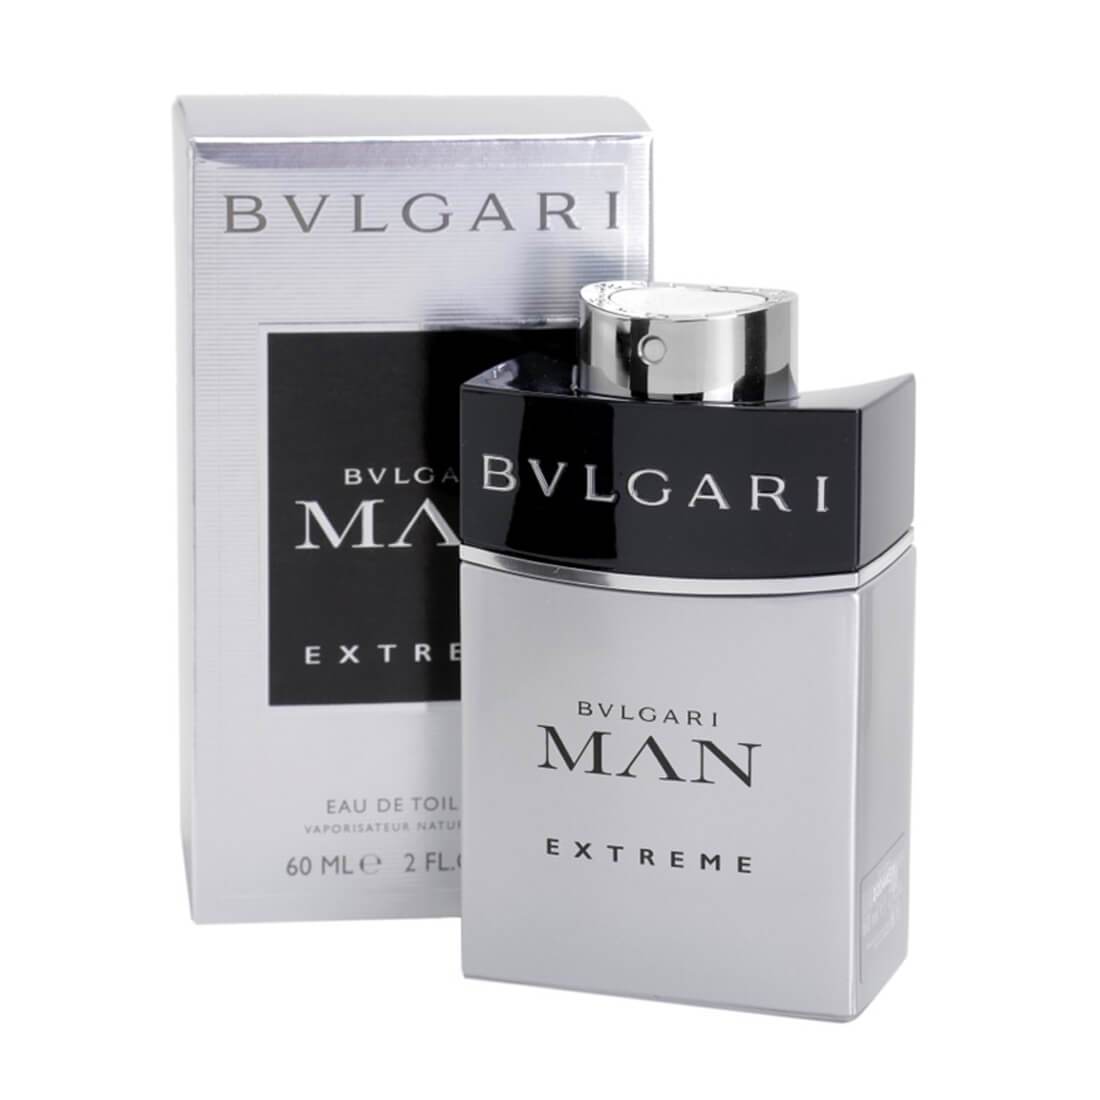 bvlgari perfume man extreme